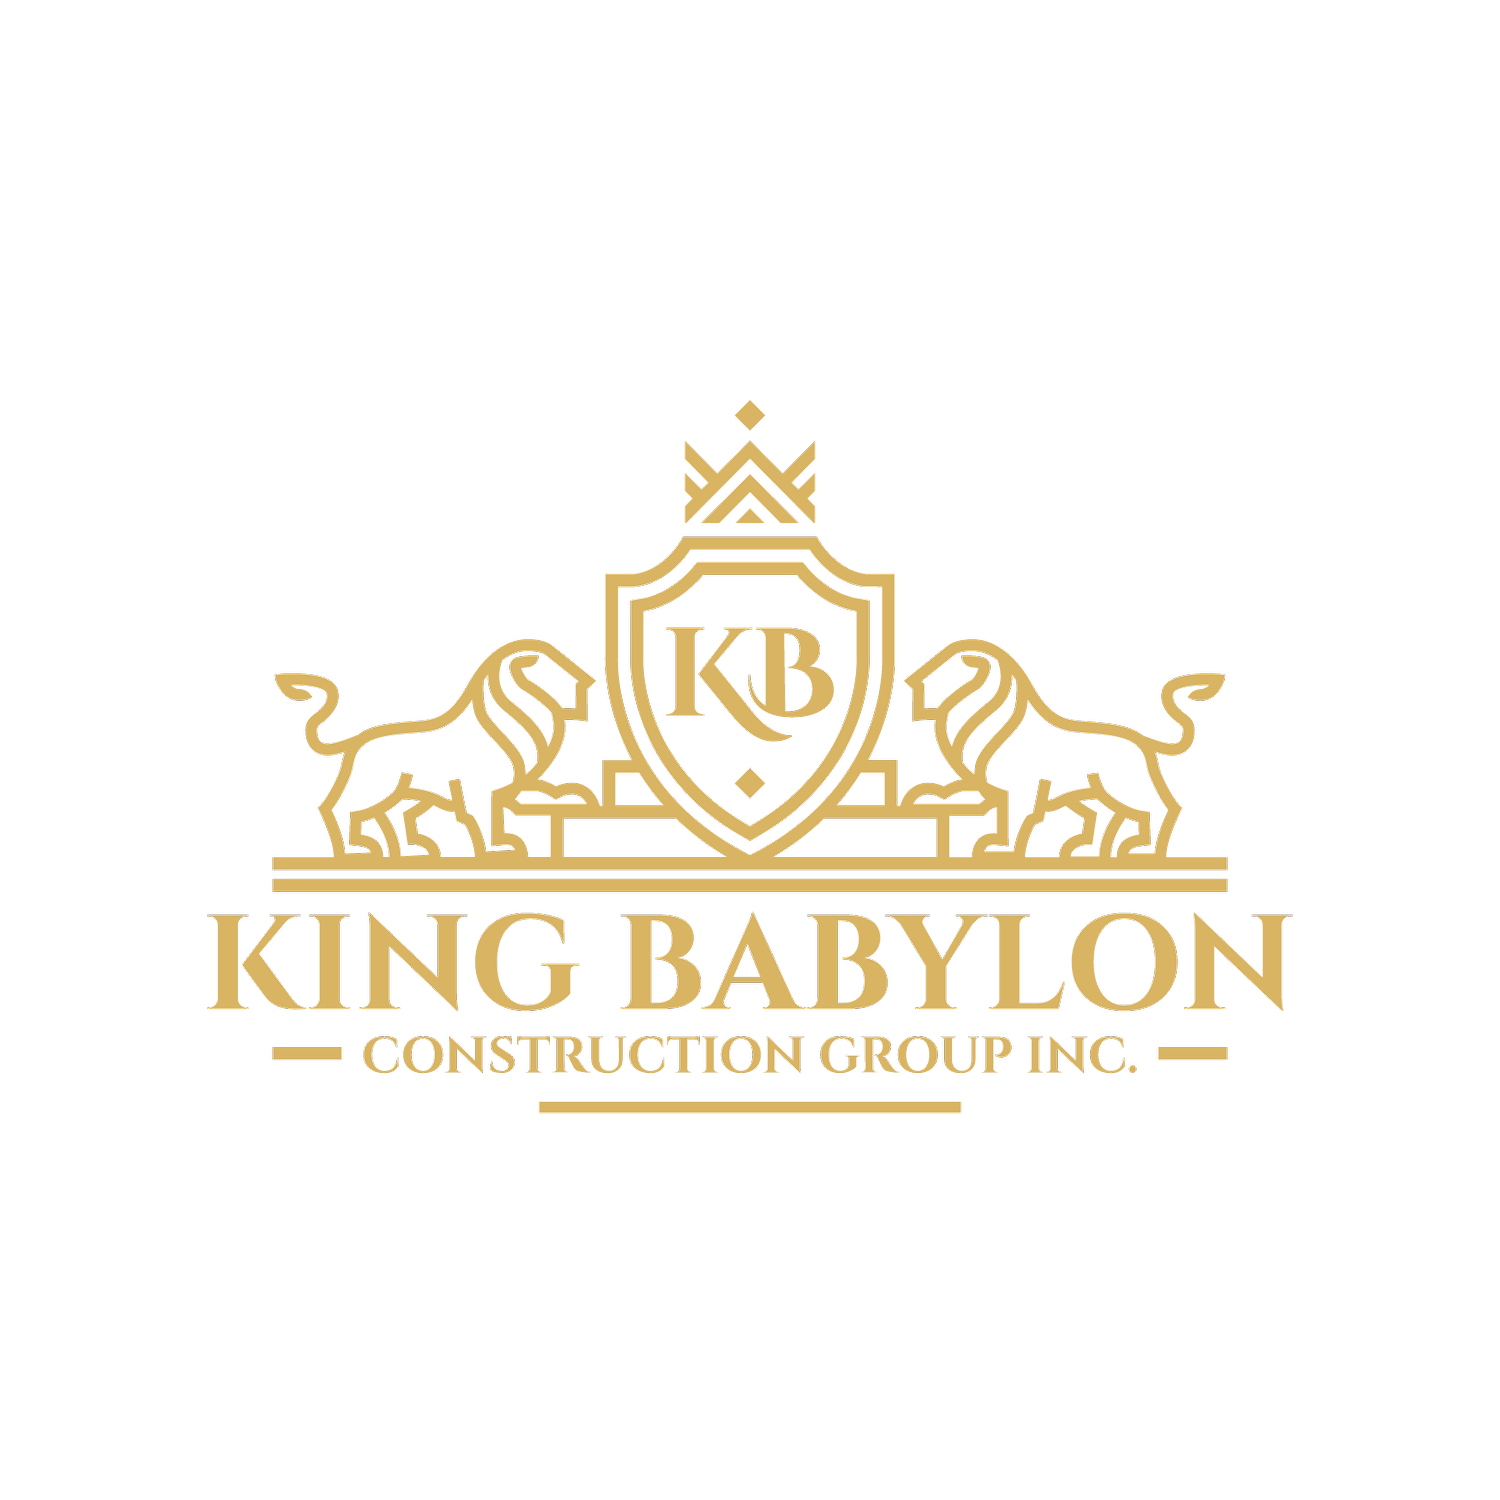 King Babylon Construction Group Inc.